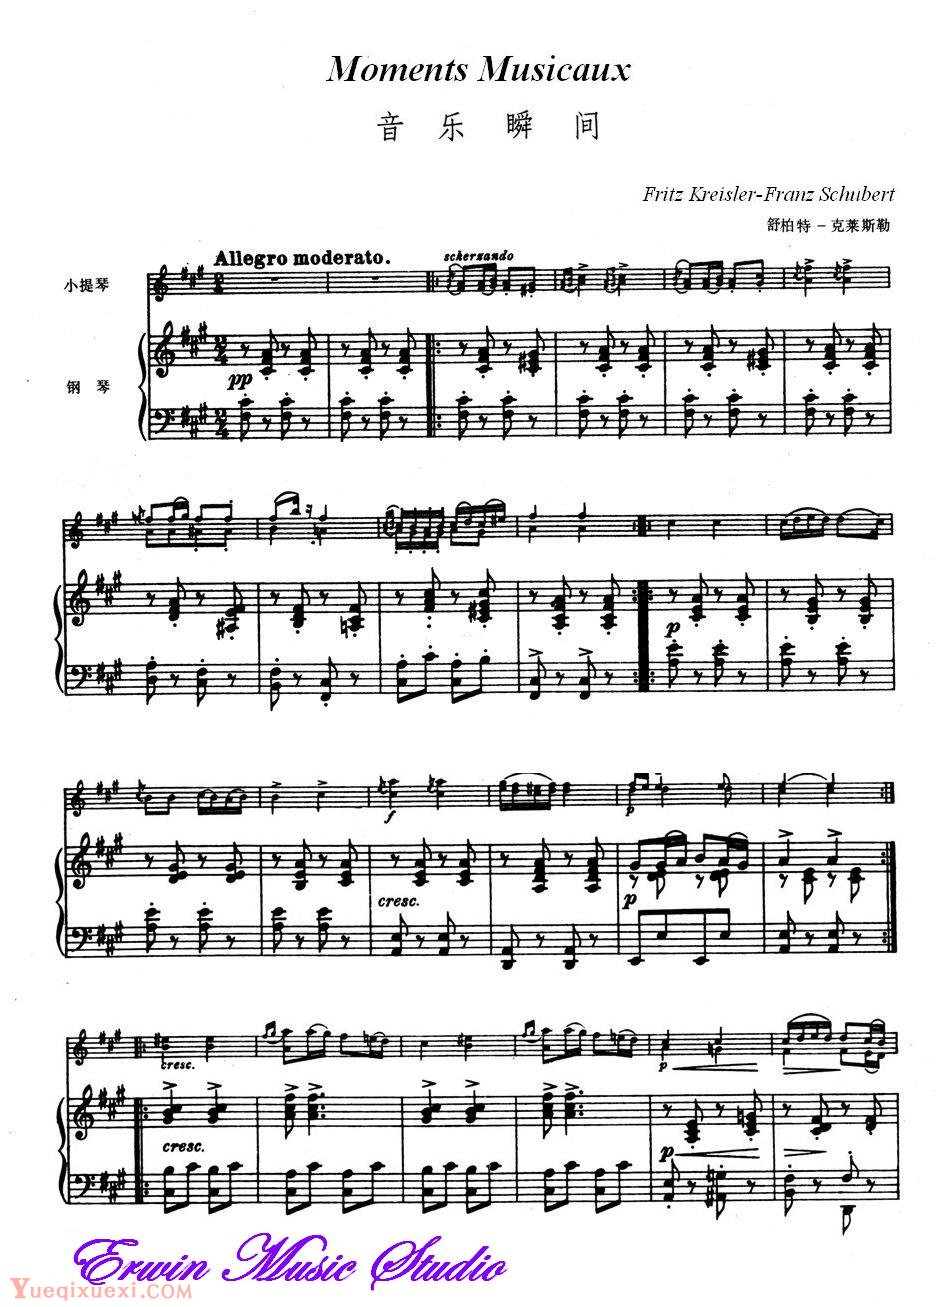 克莱斯勒-舒伯特-音乐瞬间 Piano  Fritz Kreisler,  Franz Schubert,  Moments Musicaux